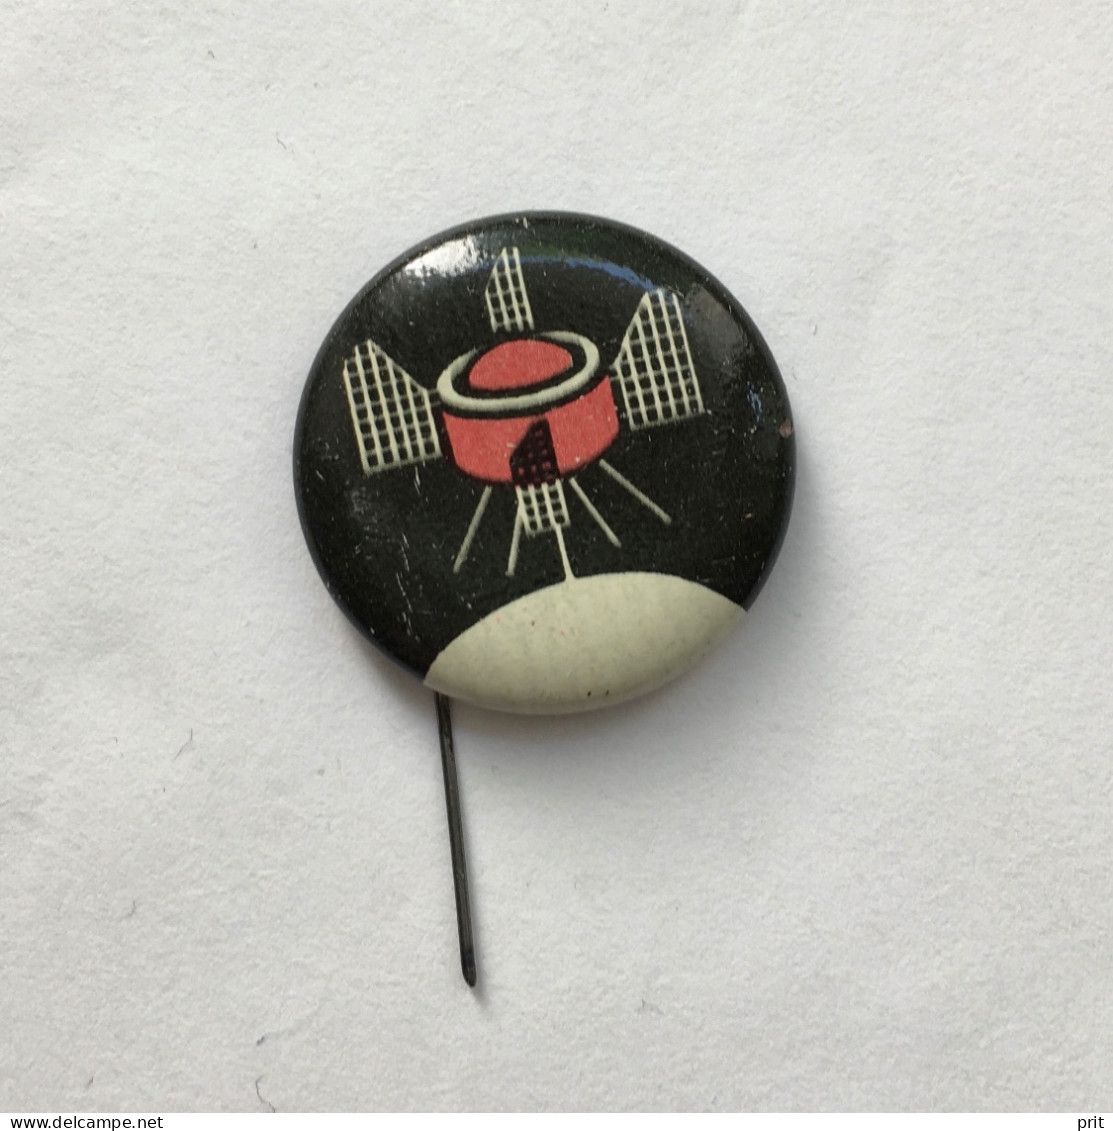 Sputnik Space Cosmos Spaceship Programe Soviet Russia USSR 1960s Vintage Pin Badge Metal - Raumfahrt